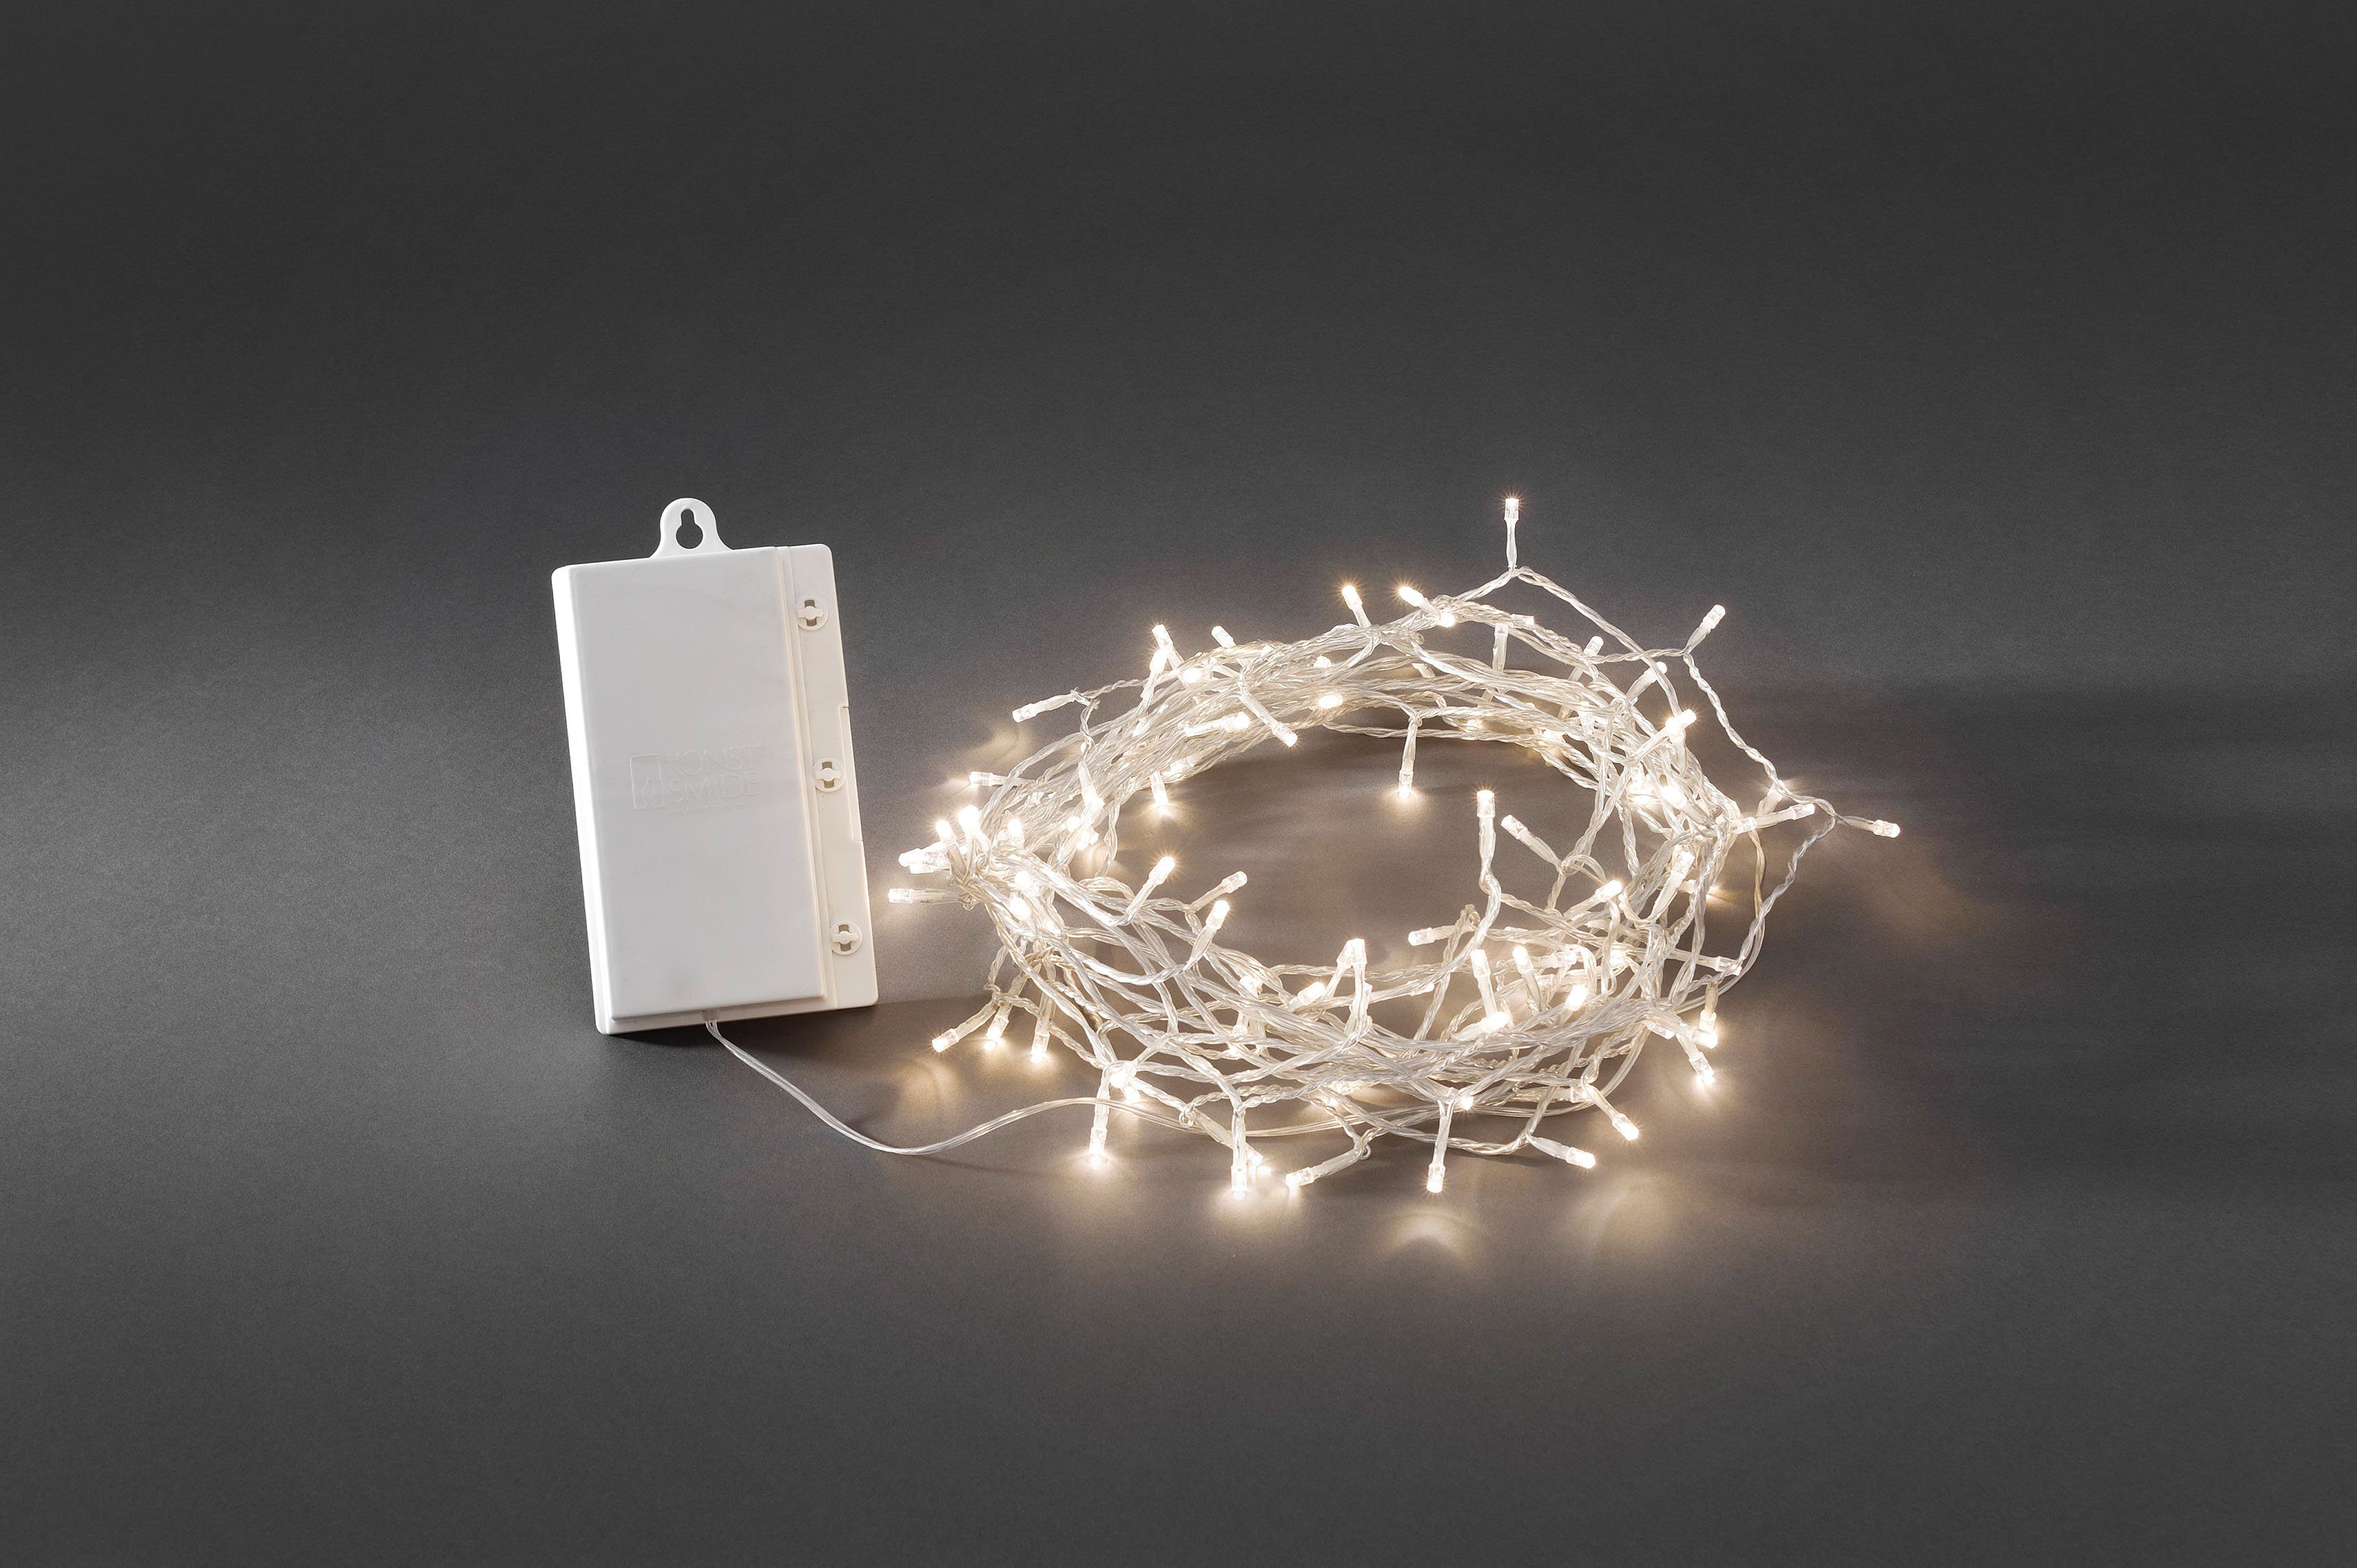 Lichtketting met batterijen Buiten werkt op batterijen LED Warm-wit Konstsmide 3719-103